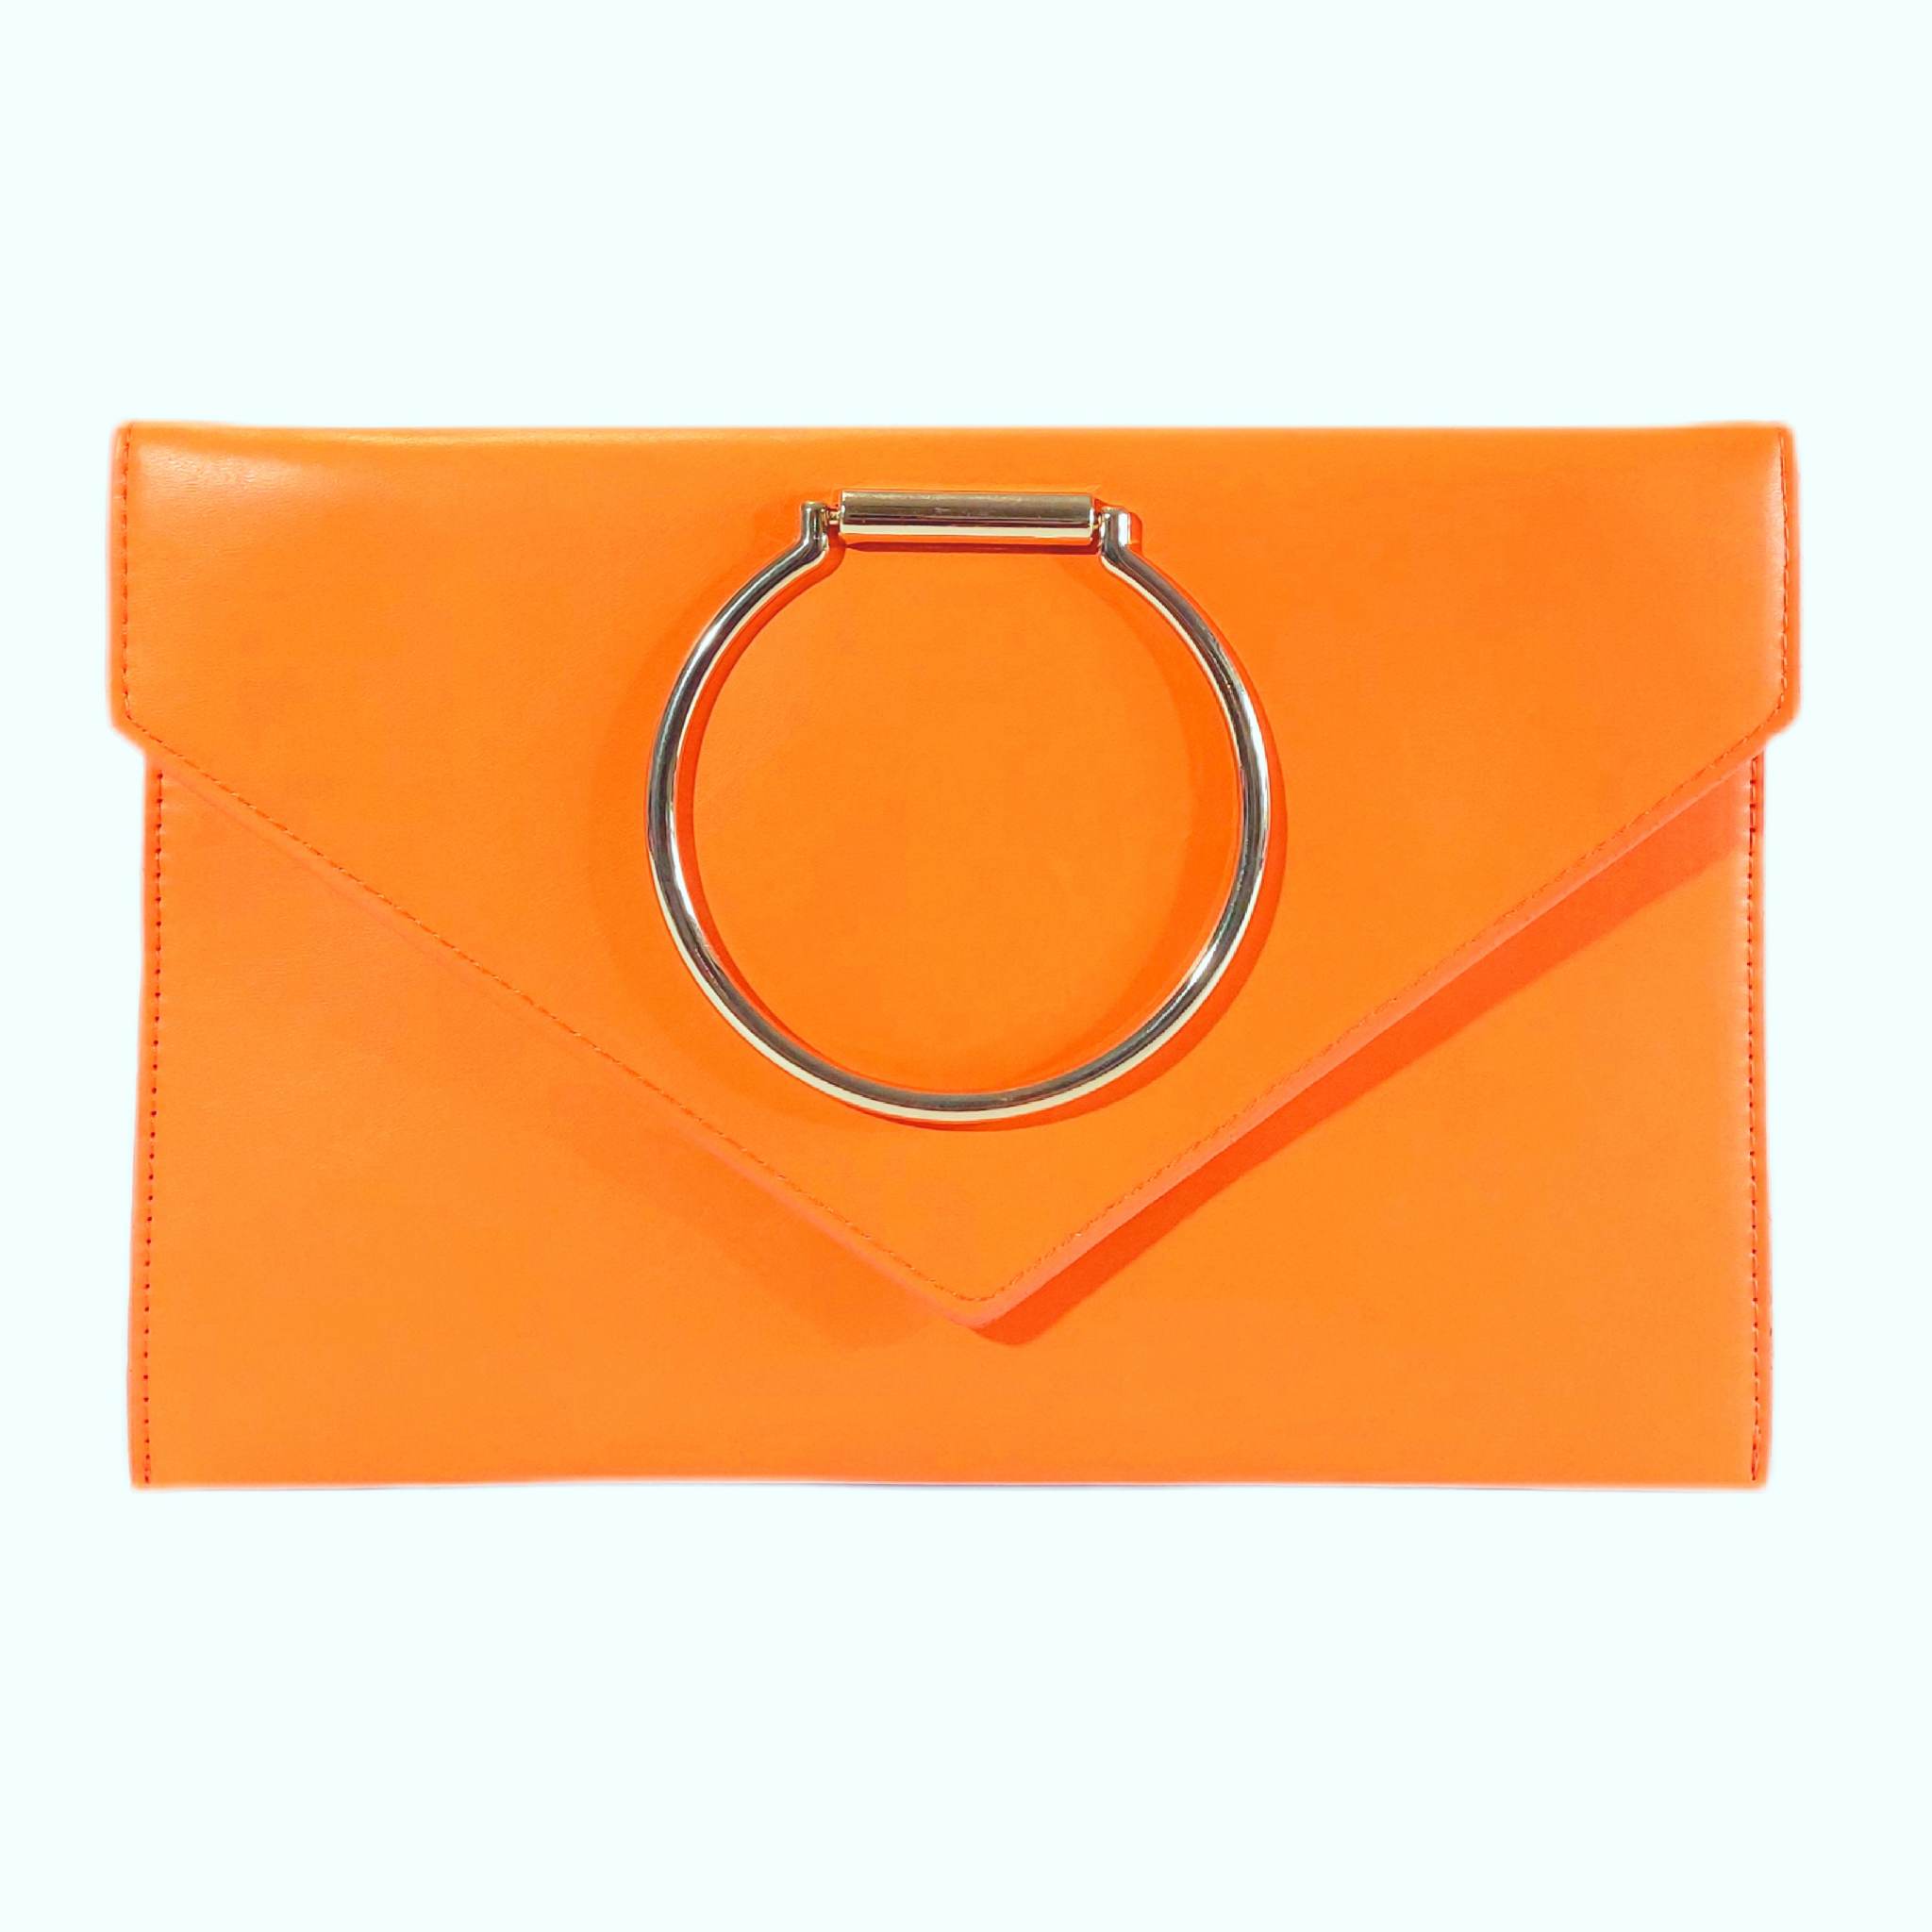 envelope-clutch-divalicious-avaline-orange